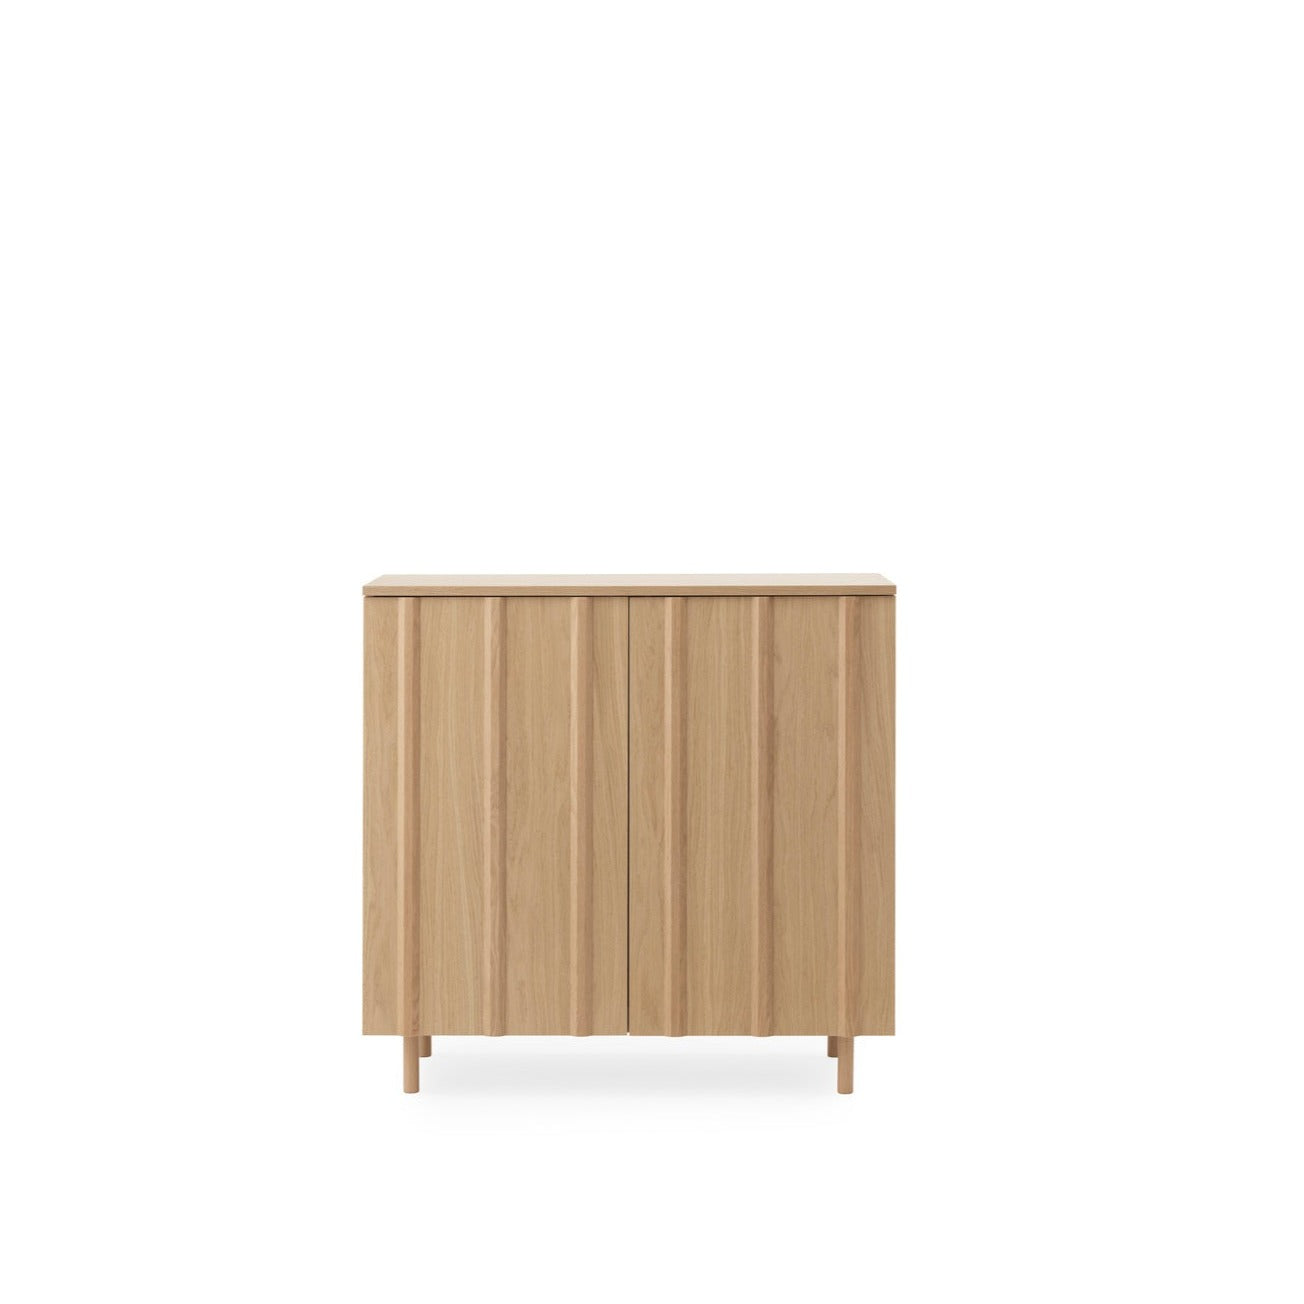 Normann Copenhagen Rib Cabinet at someday designs. #colour_oak